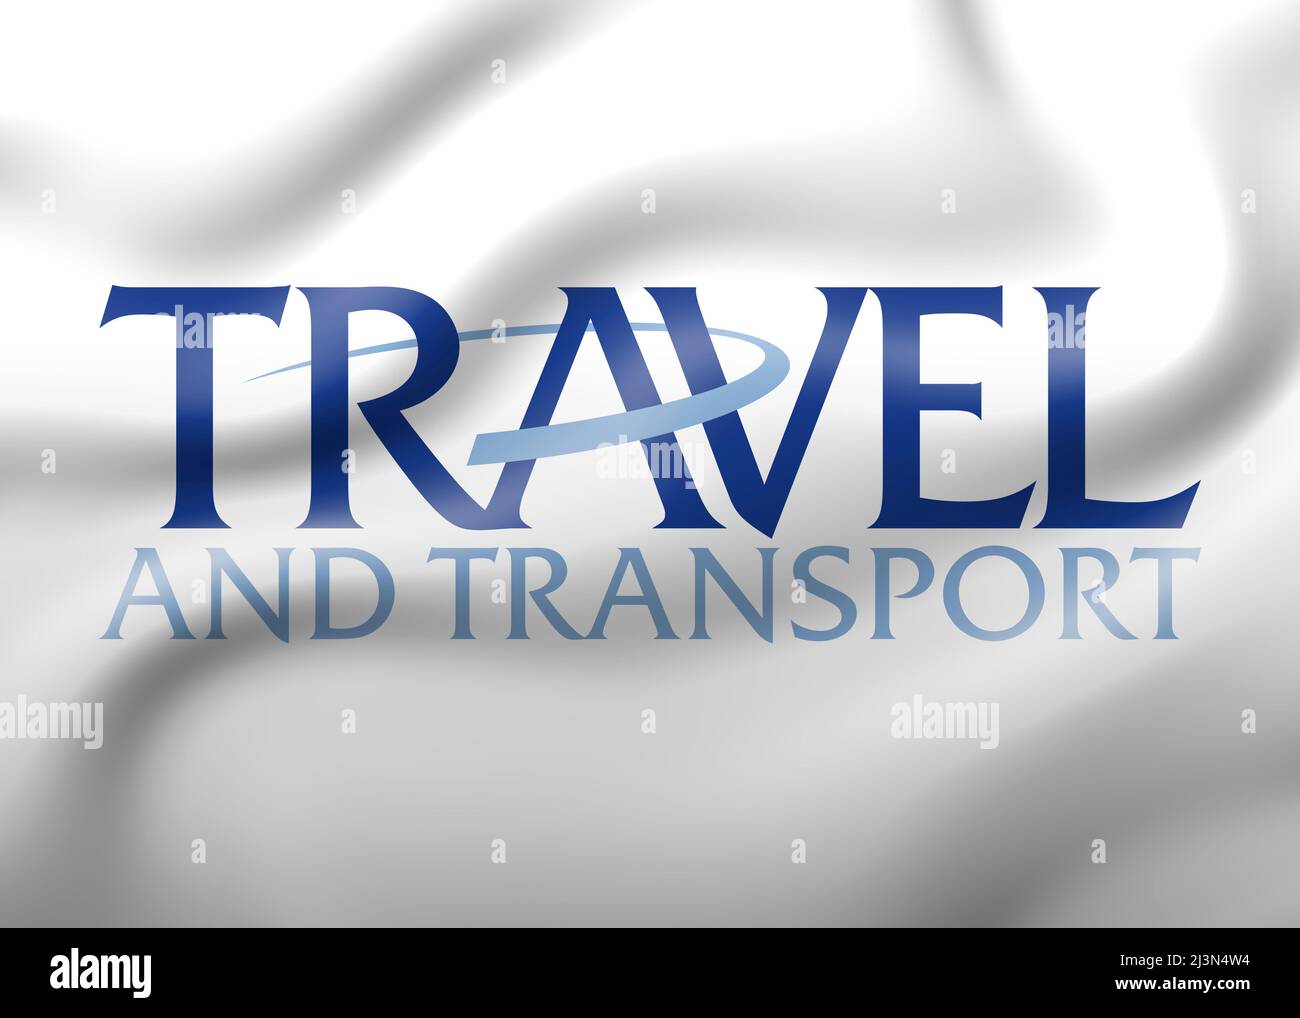 Travel and transport logo Stock Photo